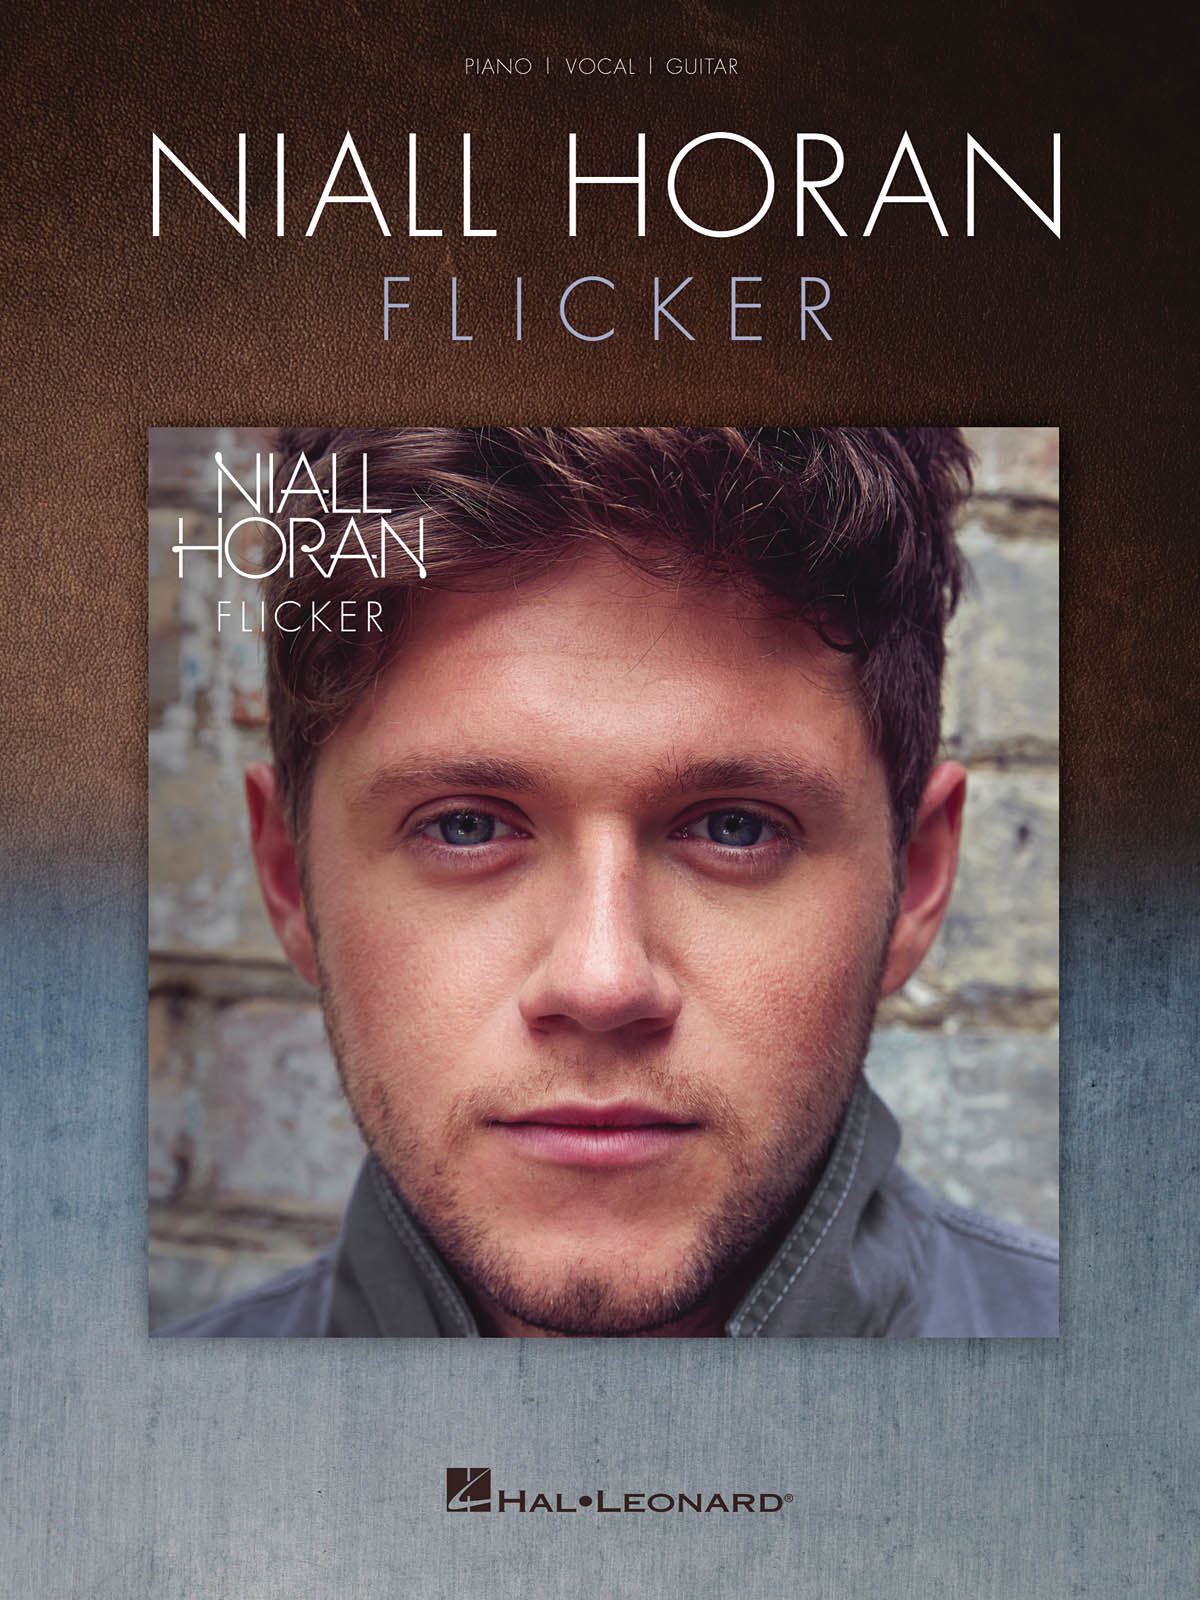 Niall Horan - Flicker: Piano  Vocal and Guitar: Album Songbook